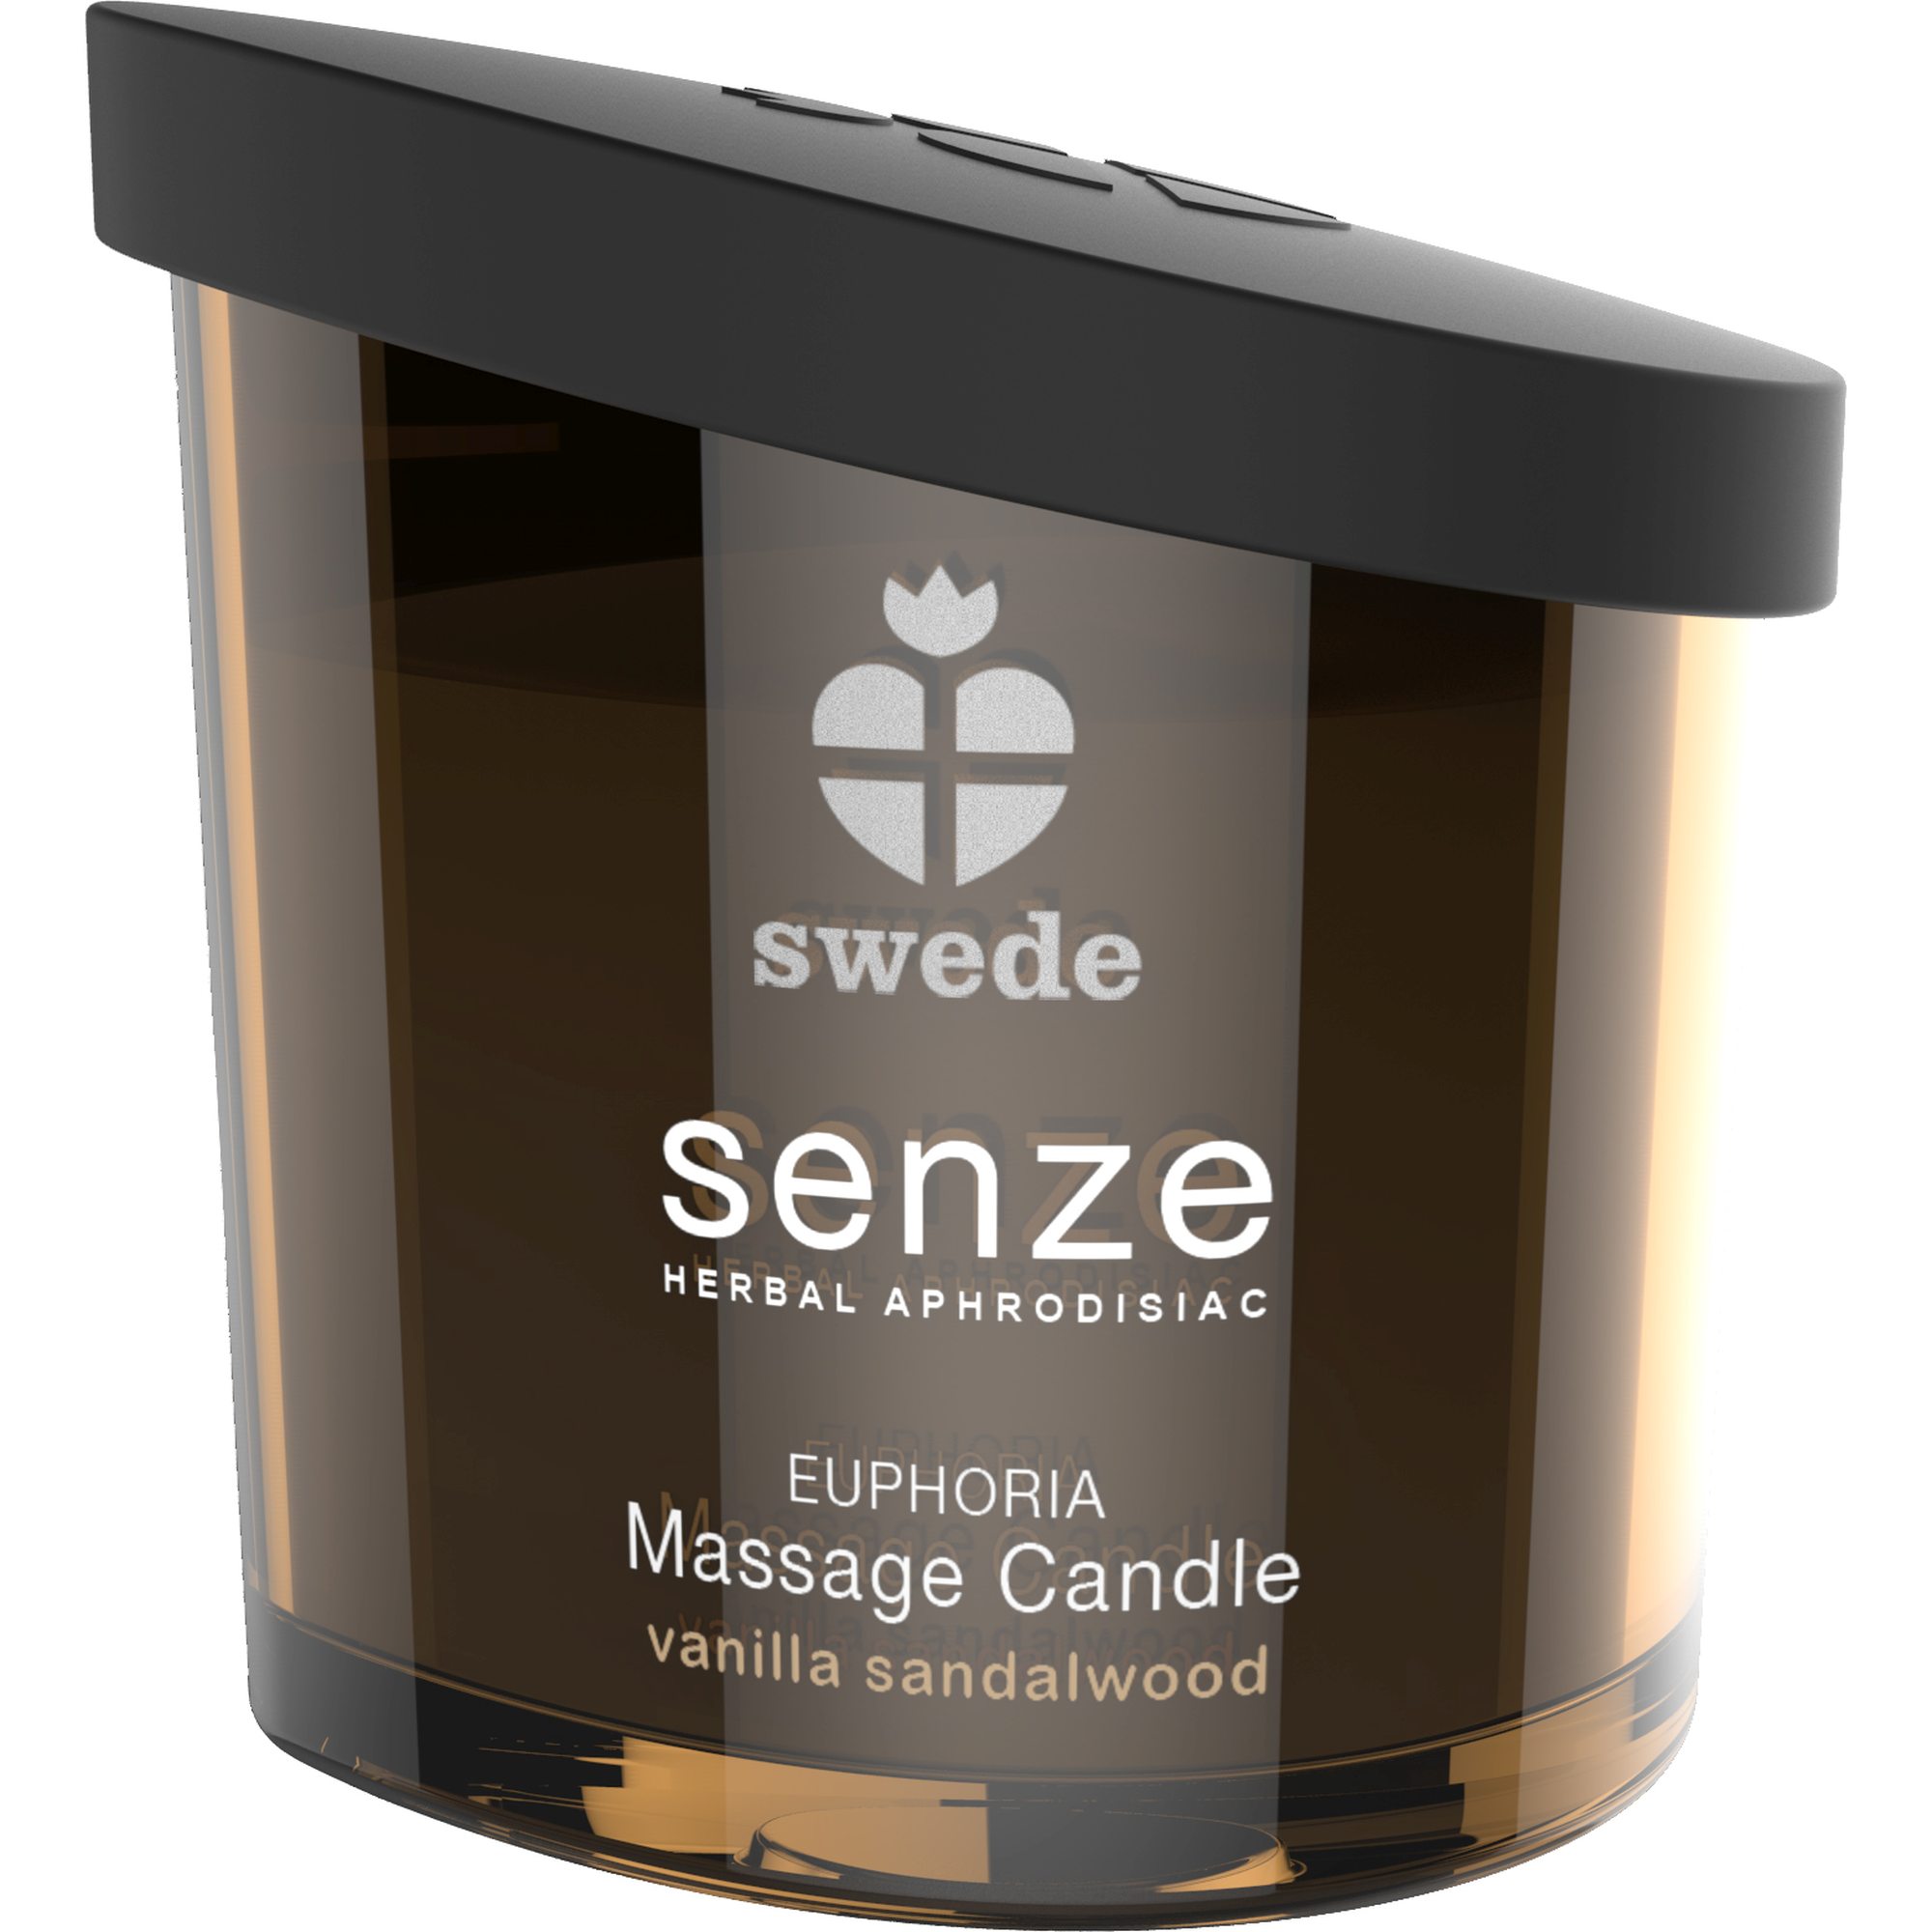 Swede – Senze Euphoria Massage Candle Vanilla Sandalwood